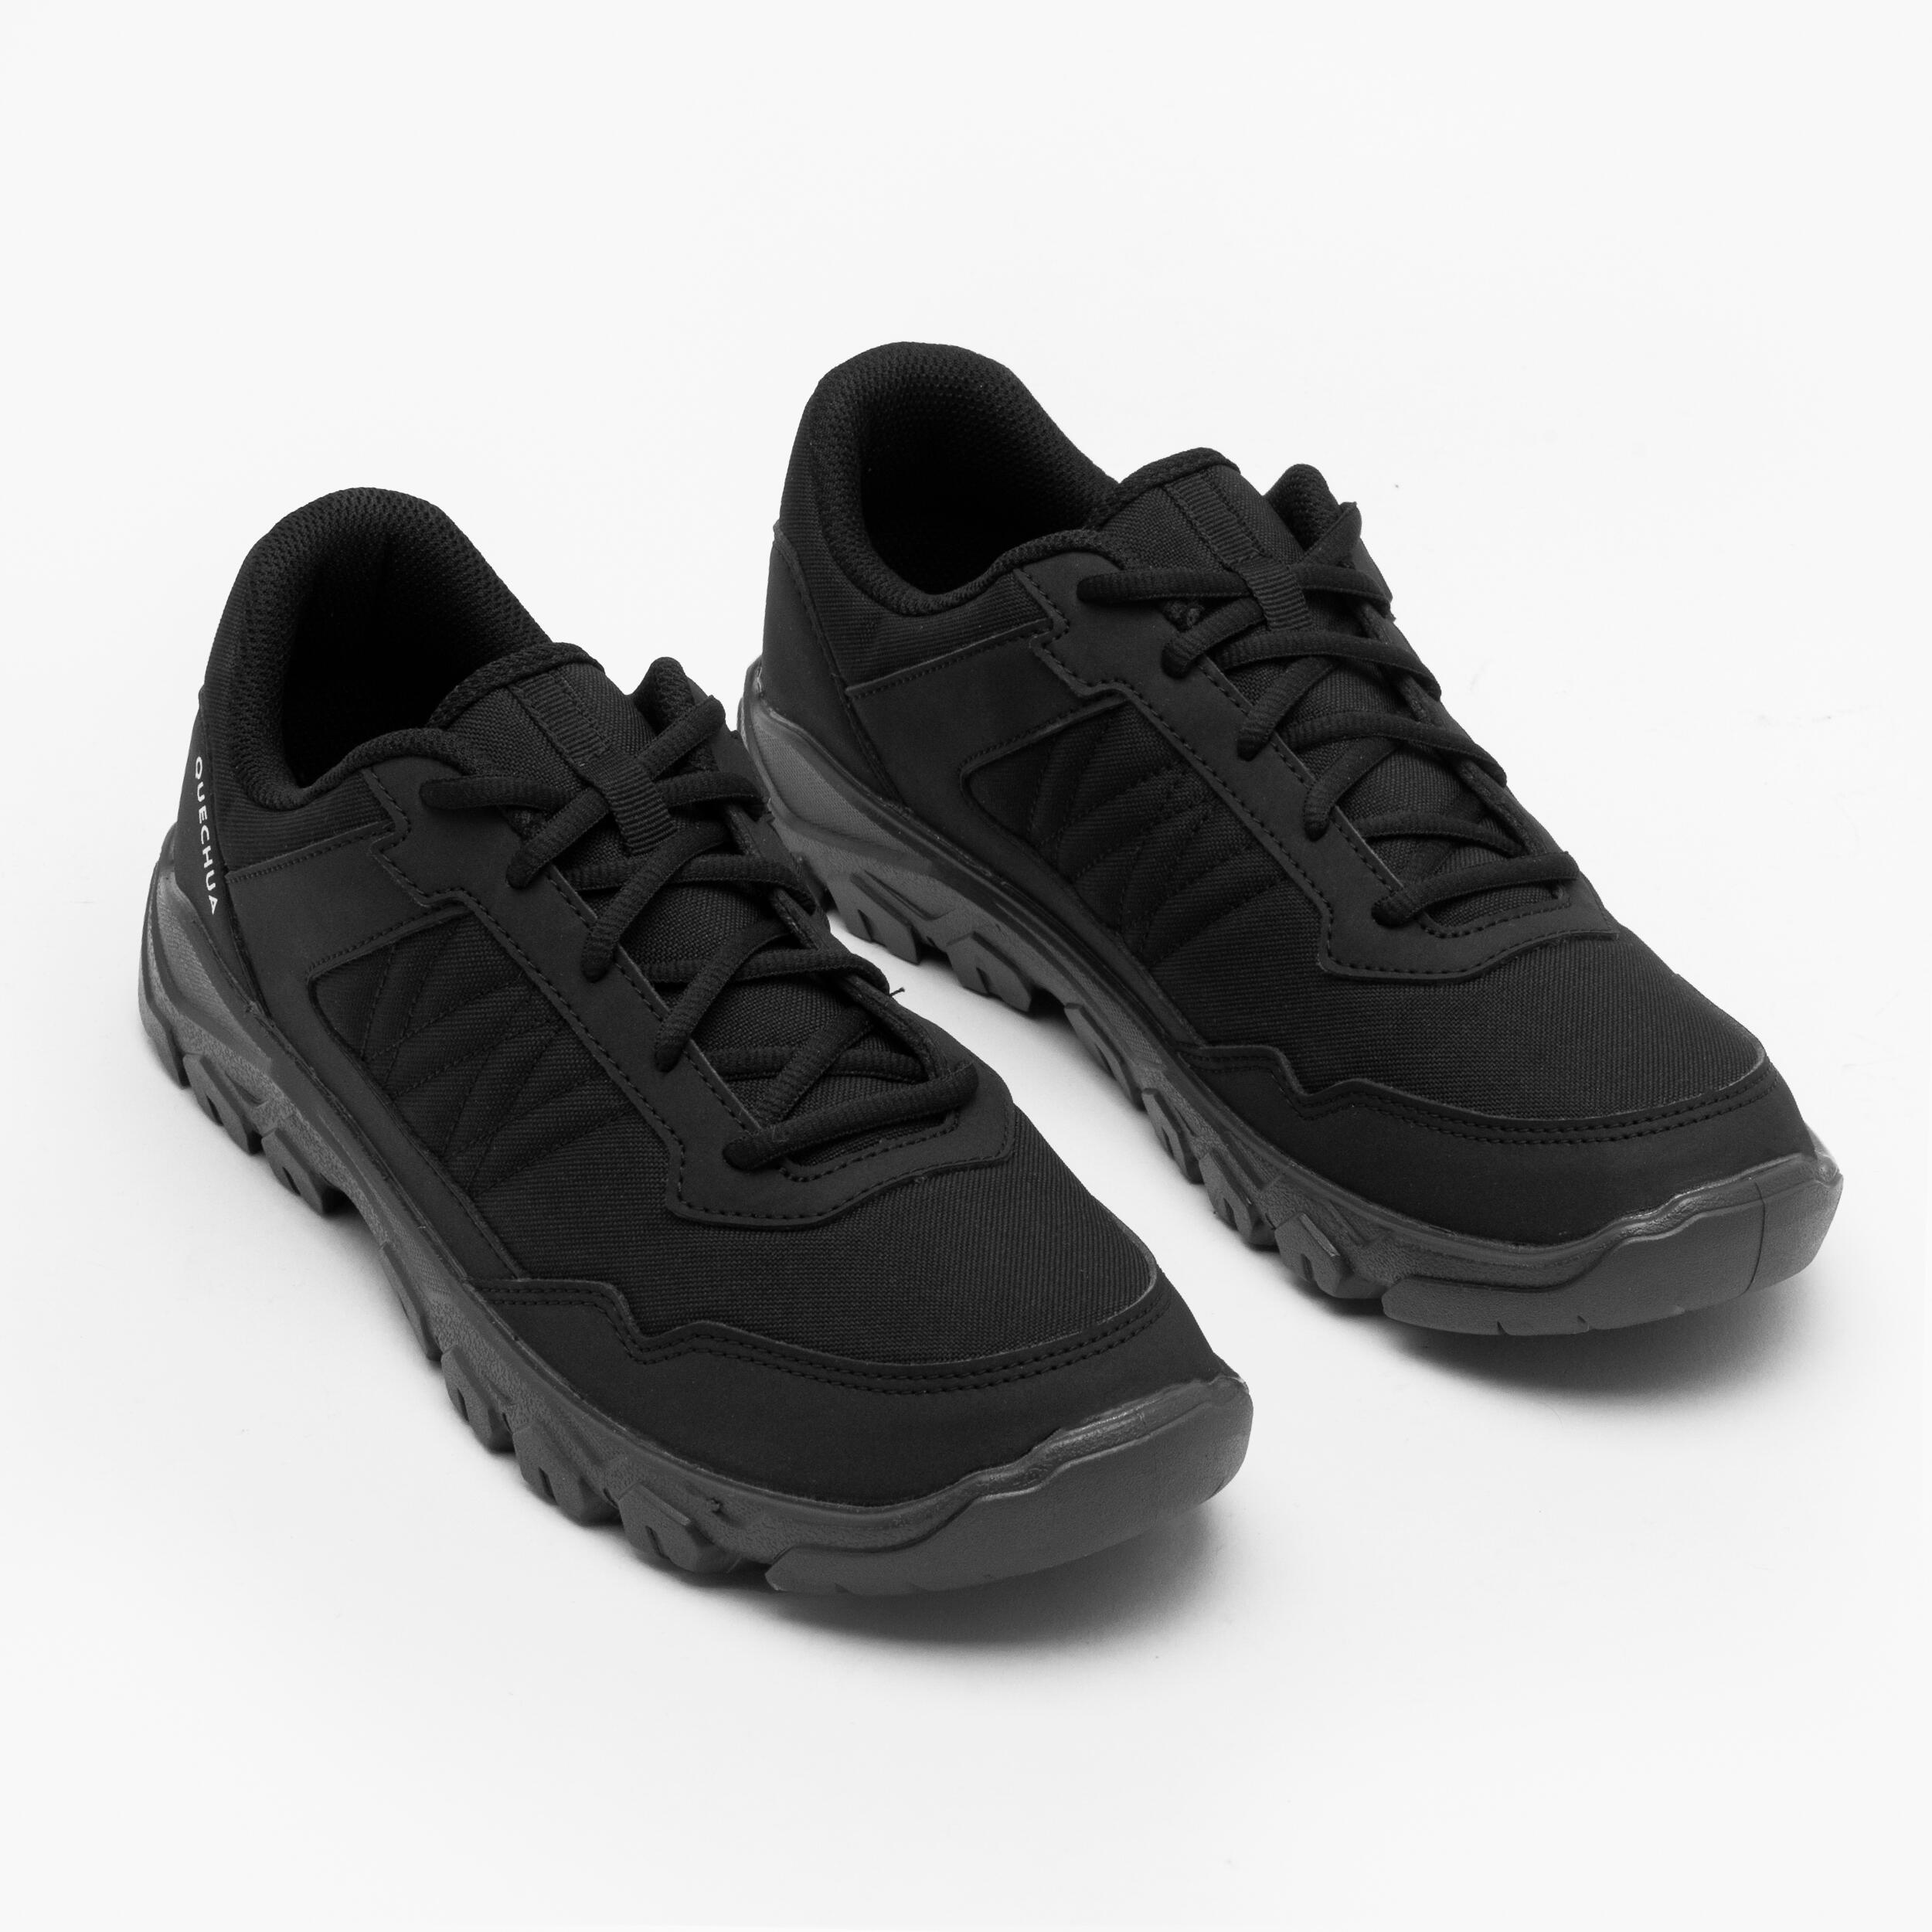 Men's hiking shoes-NH50 LOW 6/7